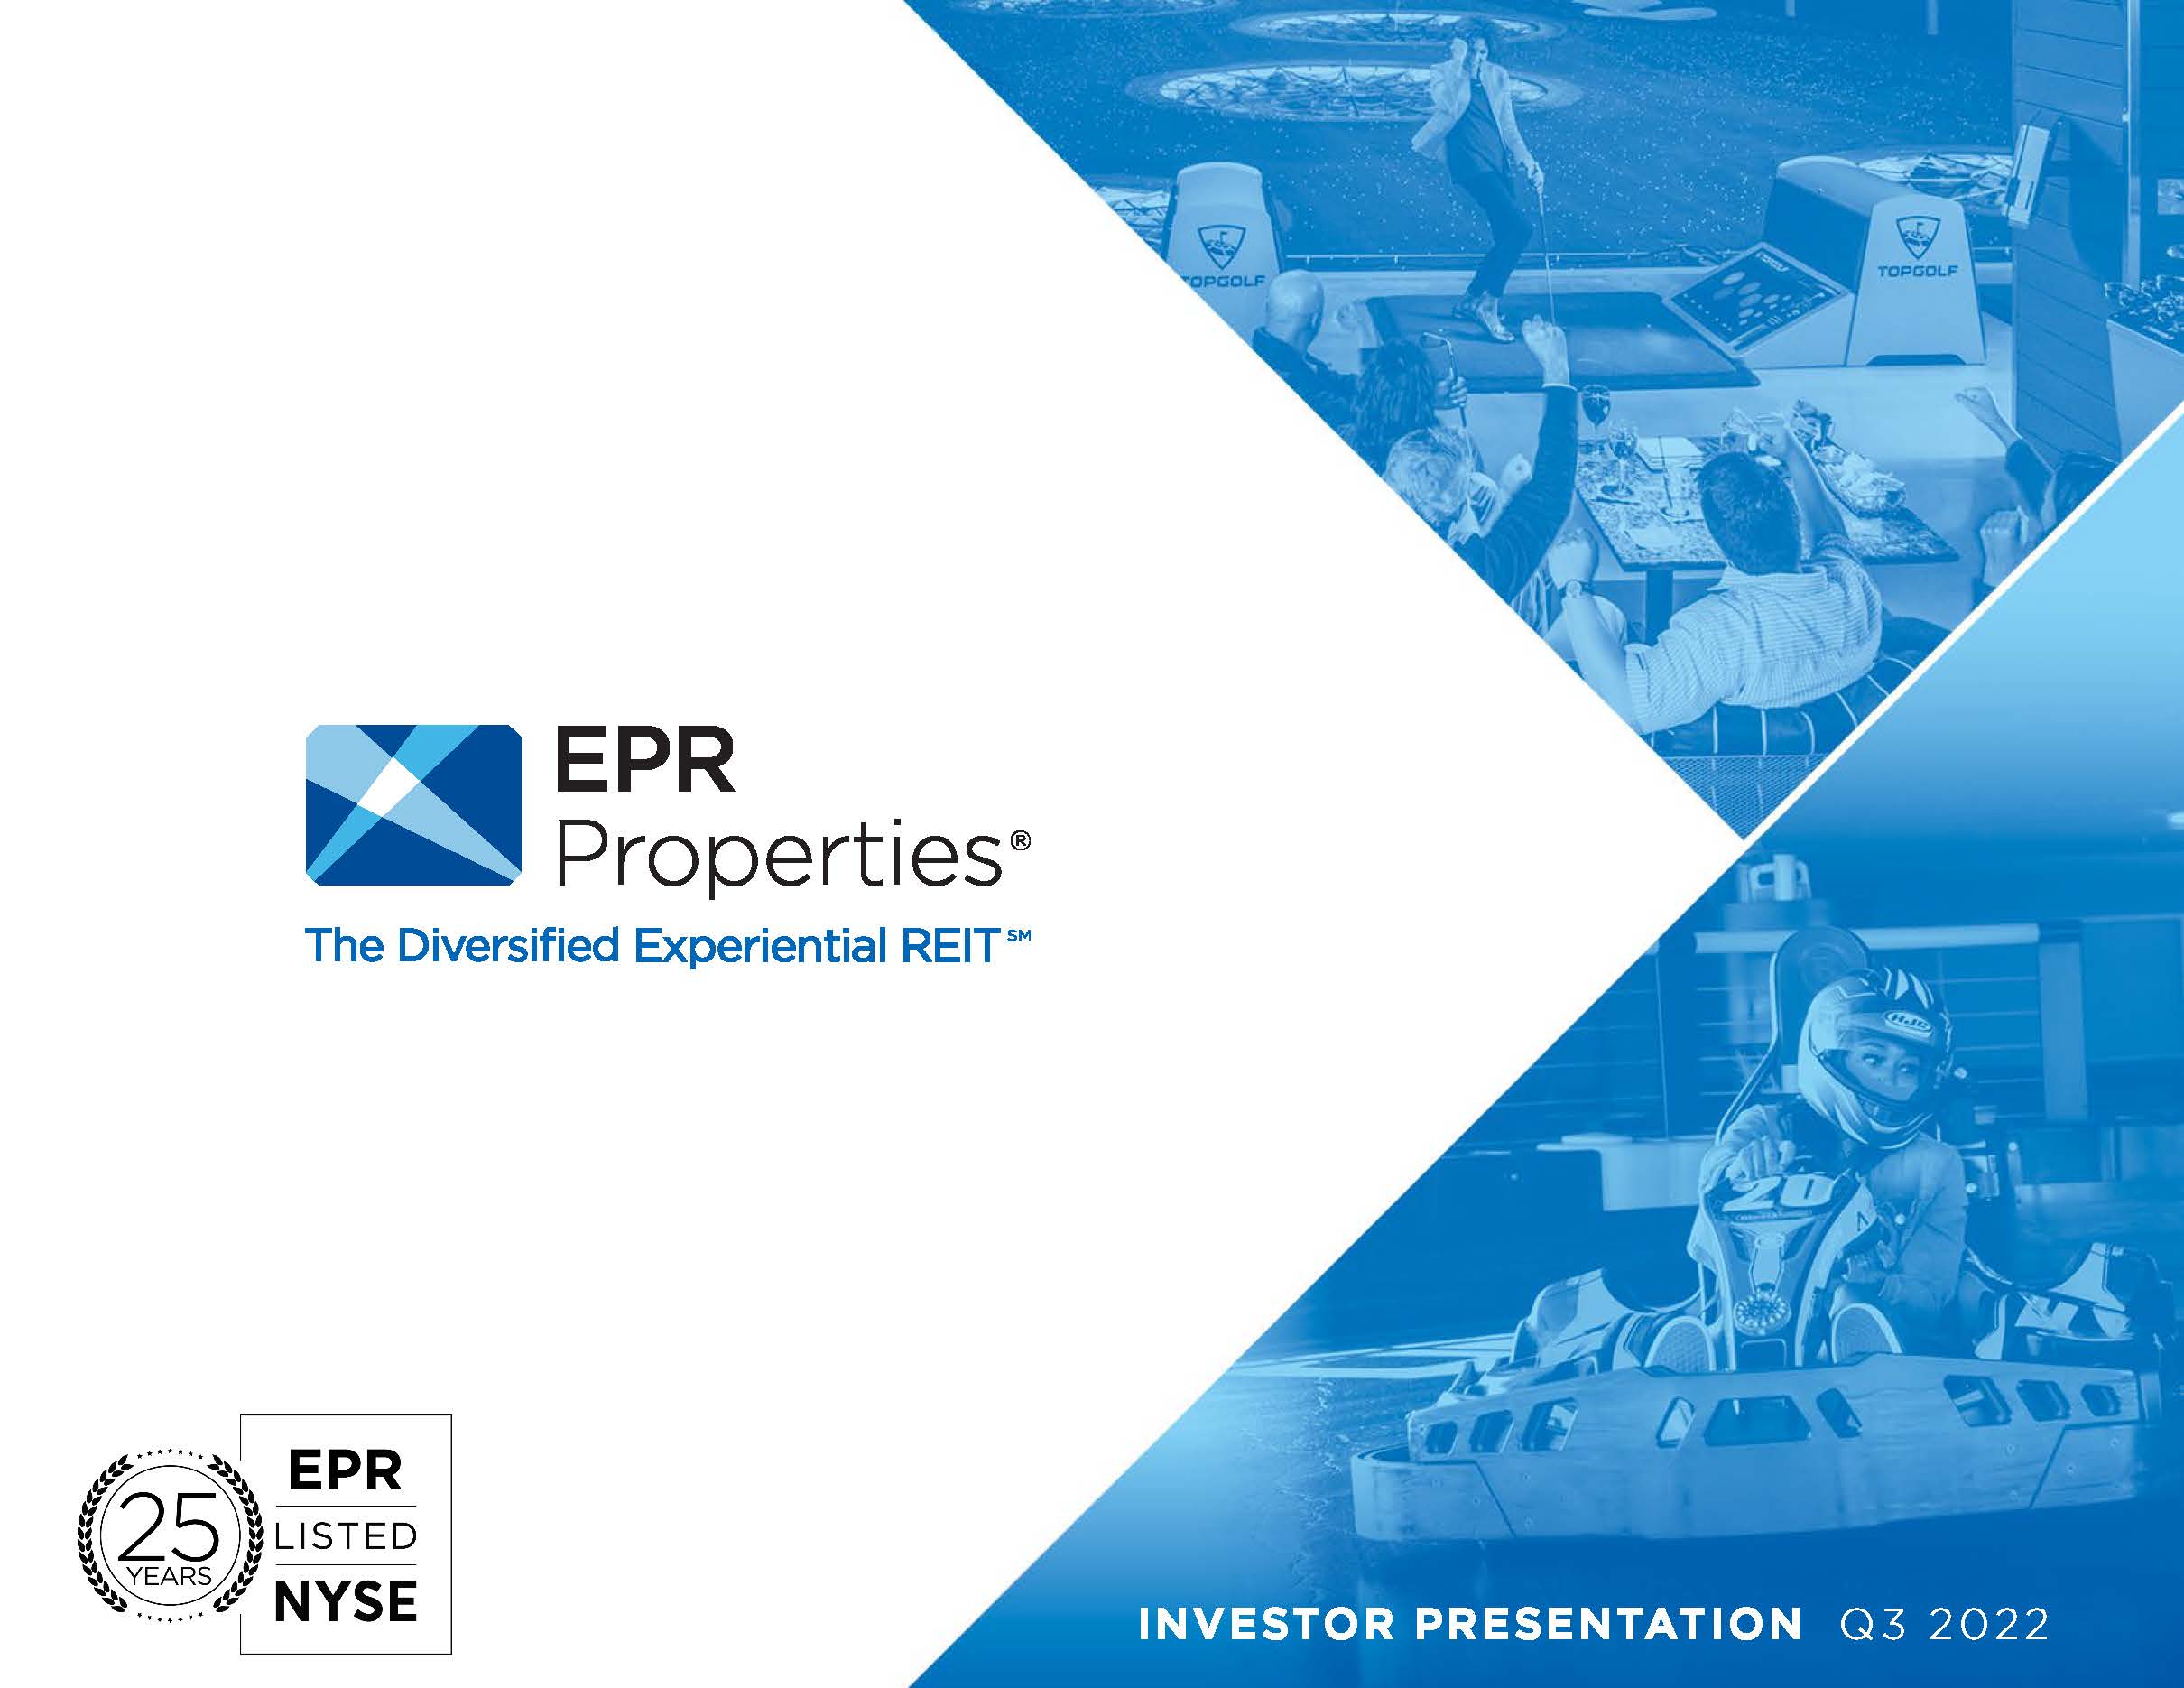 EPR Properties: The Diversified Experiential REIT